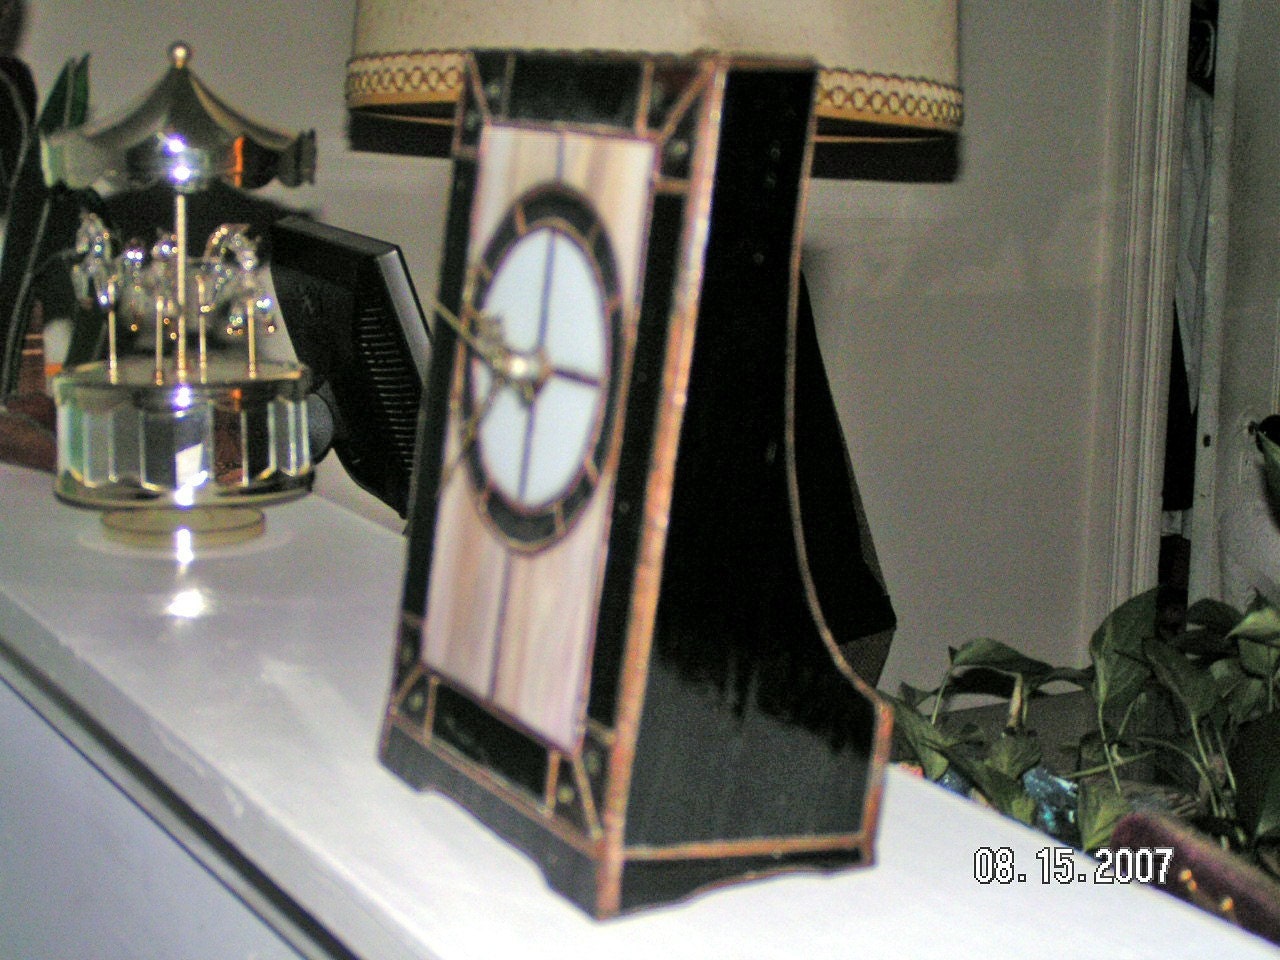 sluethgear covert digital wireless mantle clock color spy camera